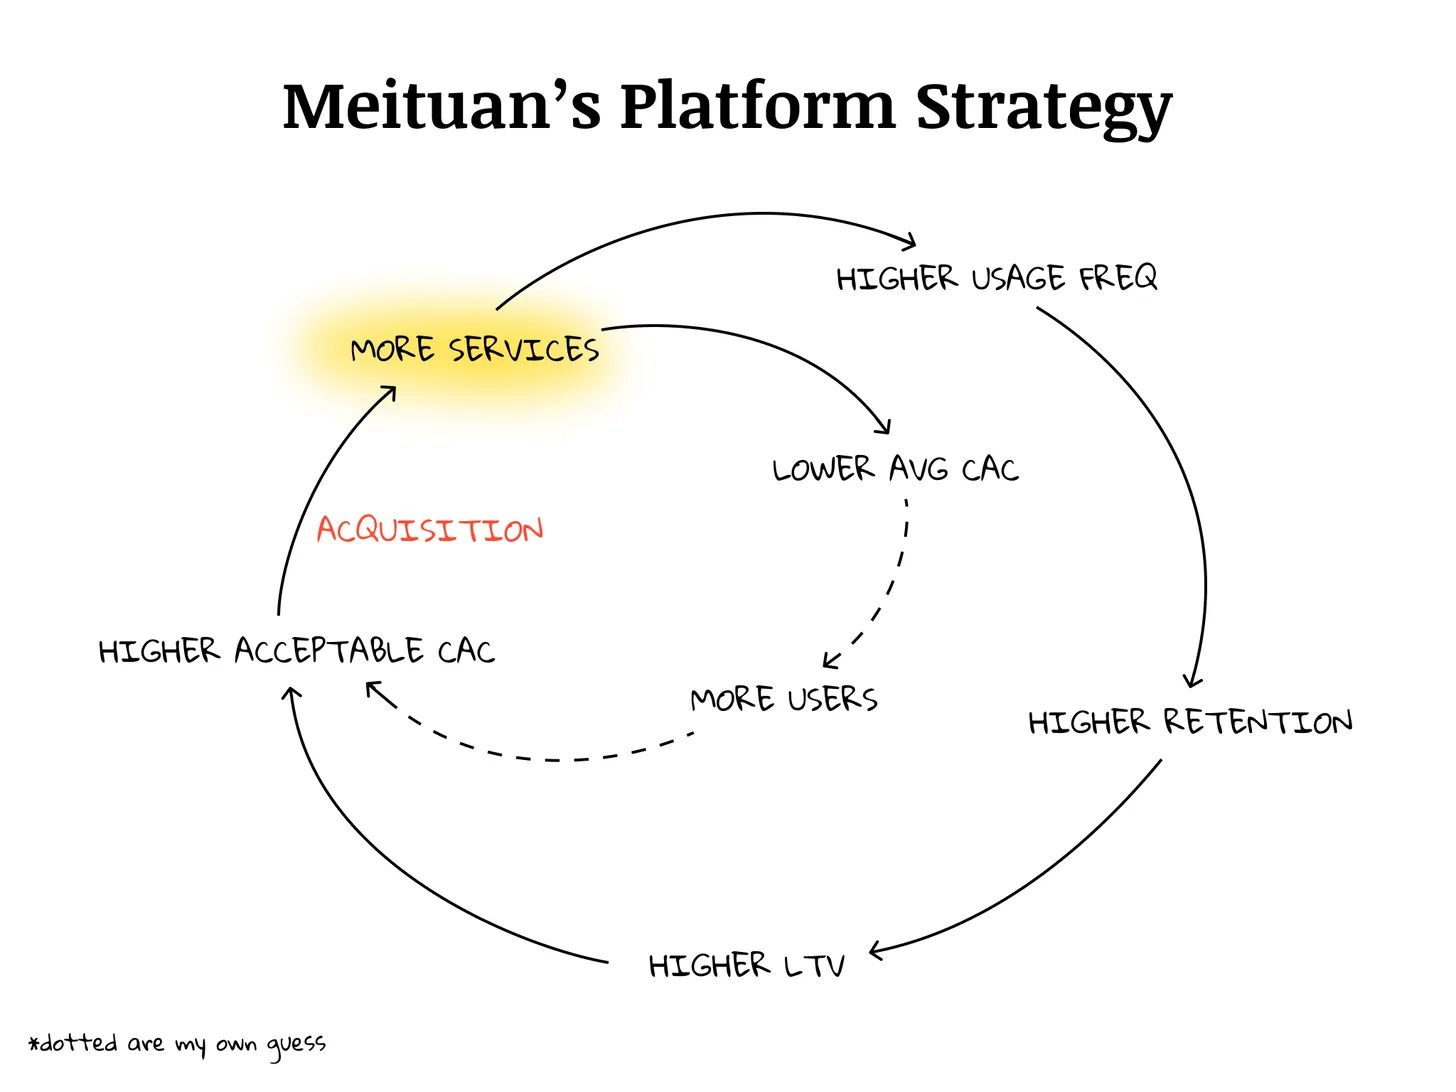 Meituan’s Platform Strategy